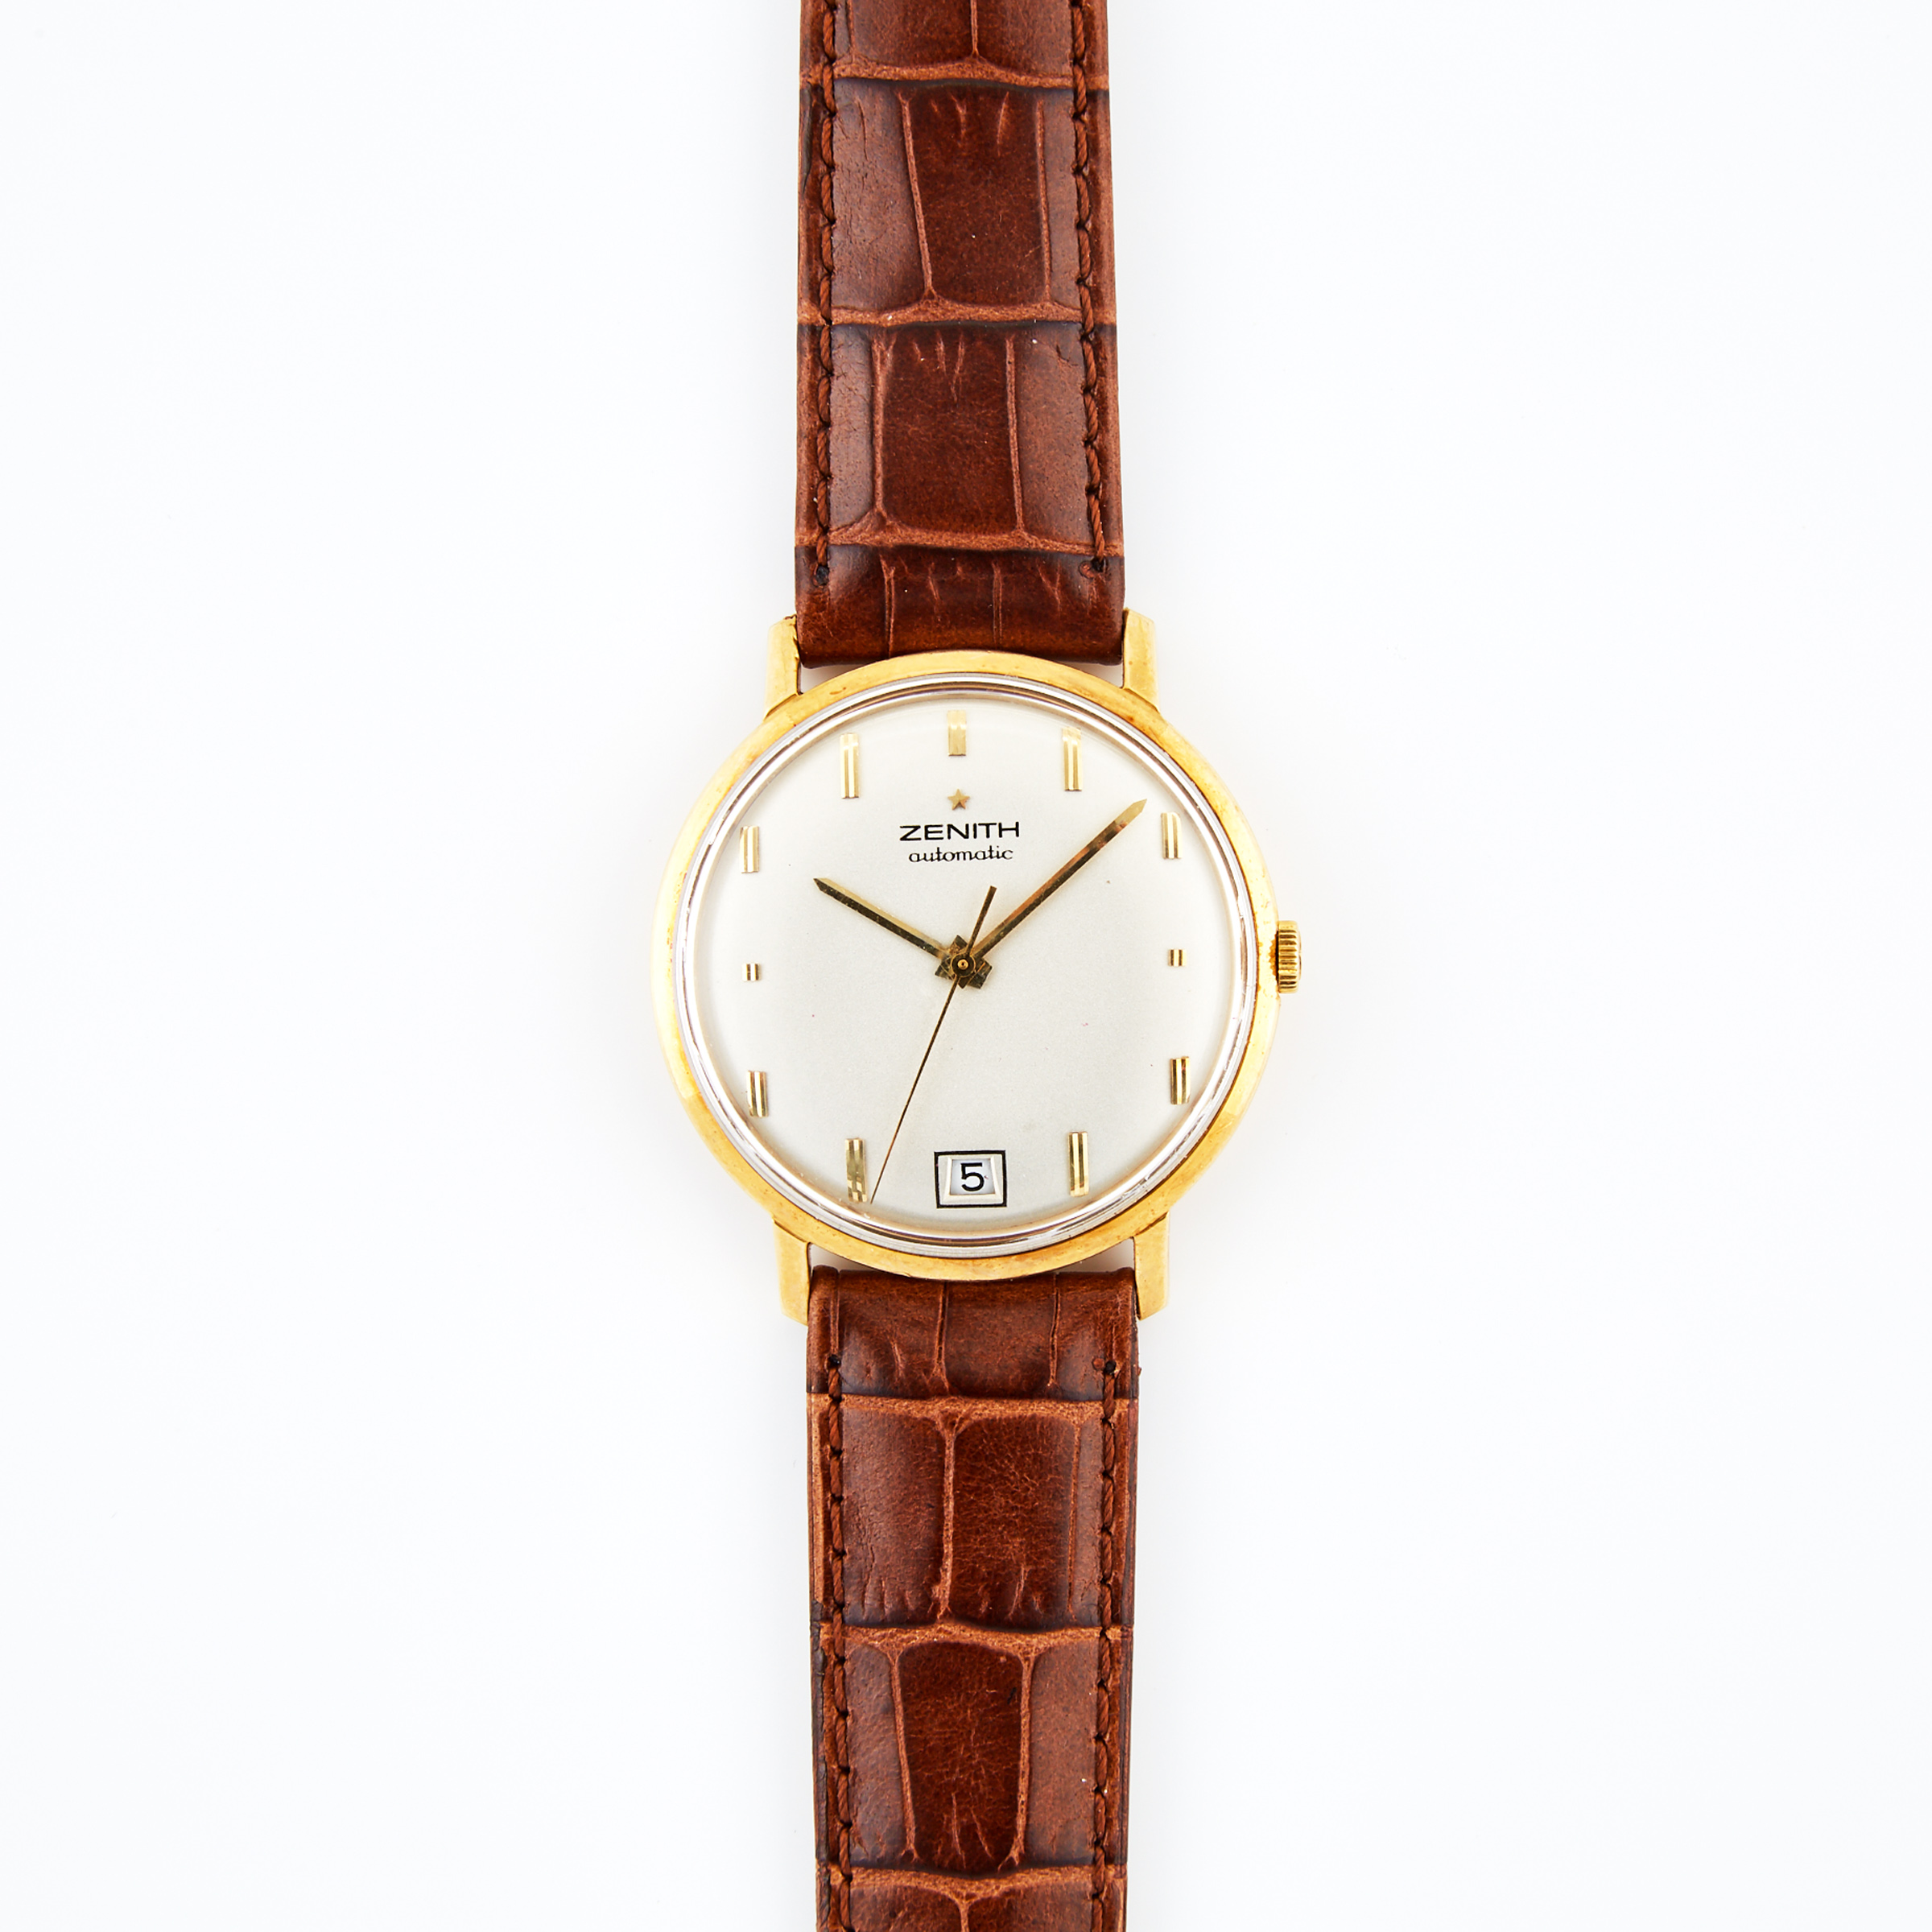 Zenith Wristwatch With Date